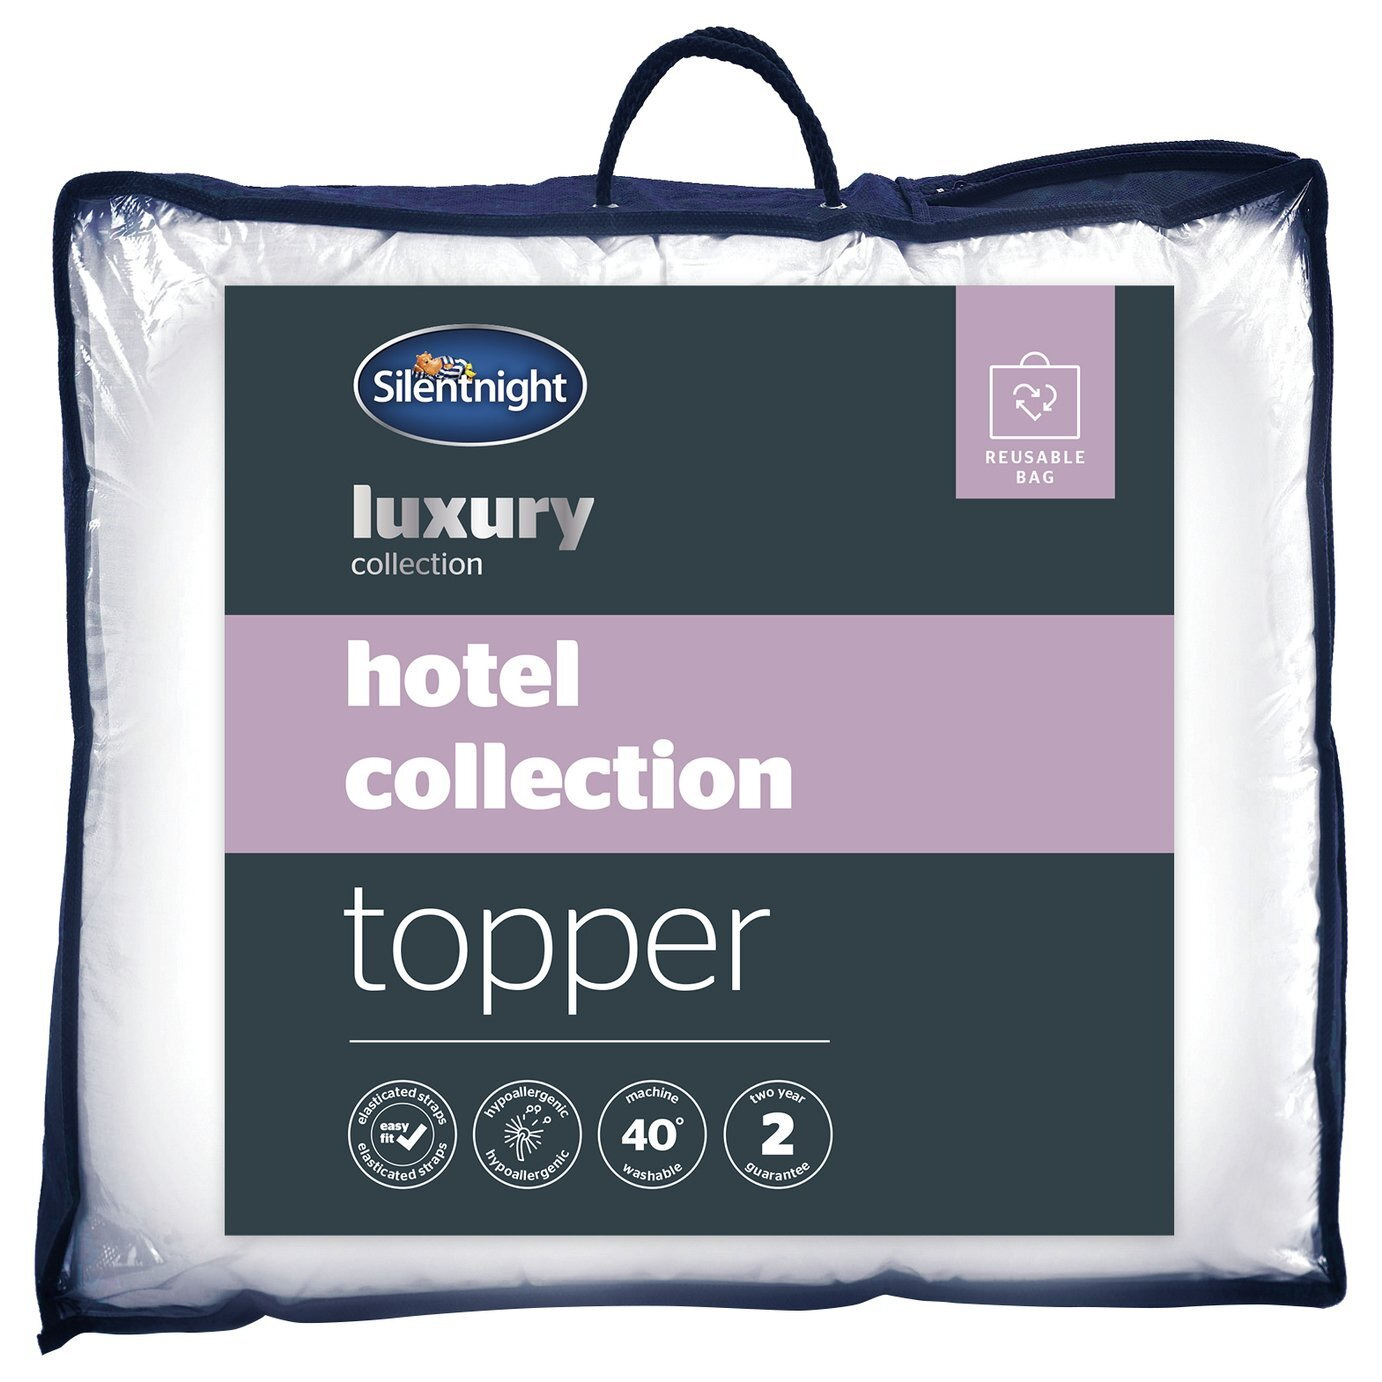 Silentnight Luxury Hotel Collection Mattress Topper - Single - image 1